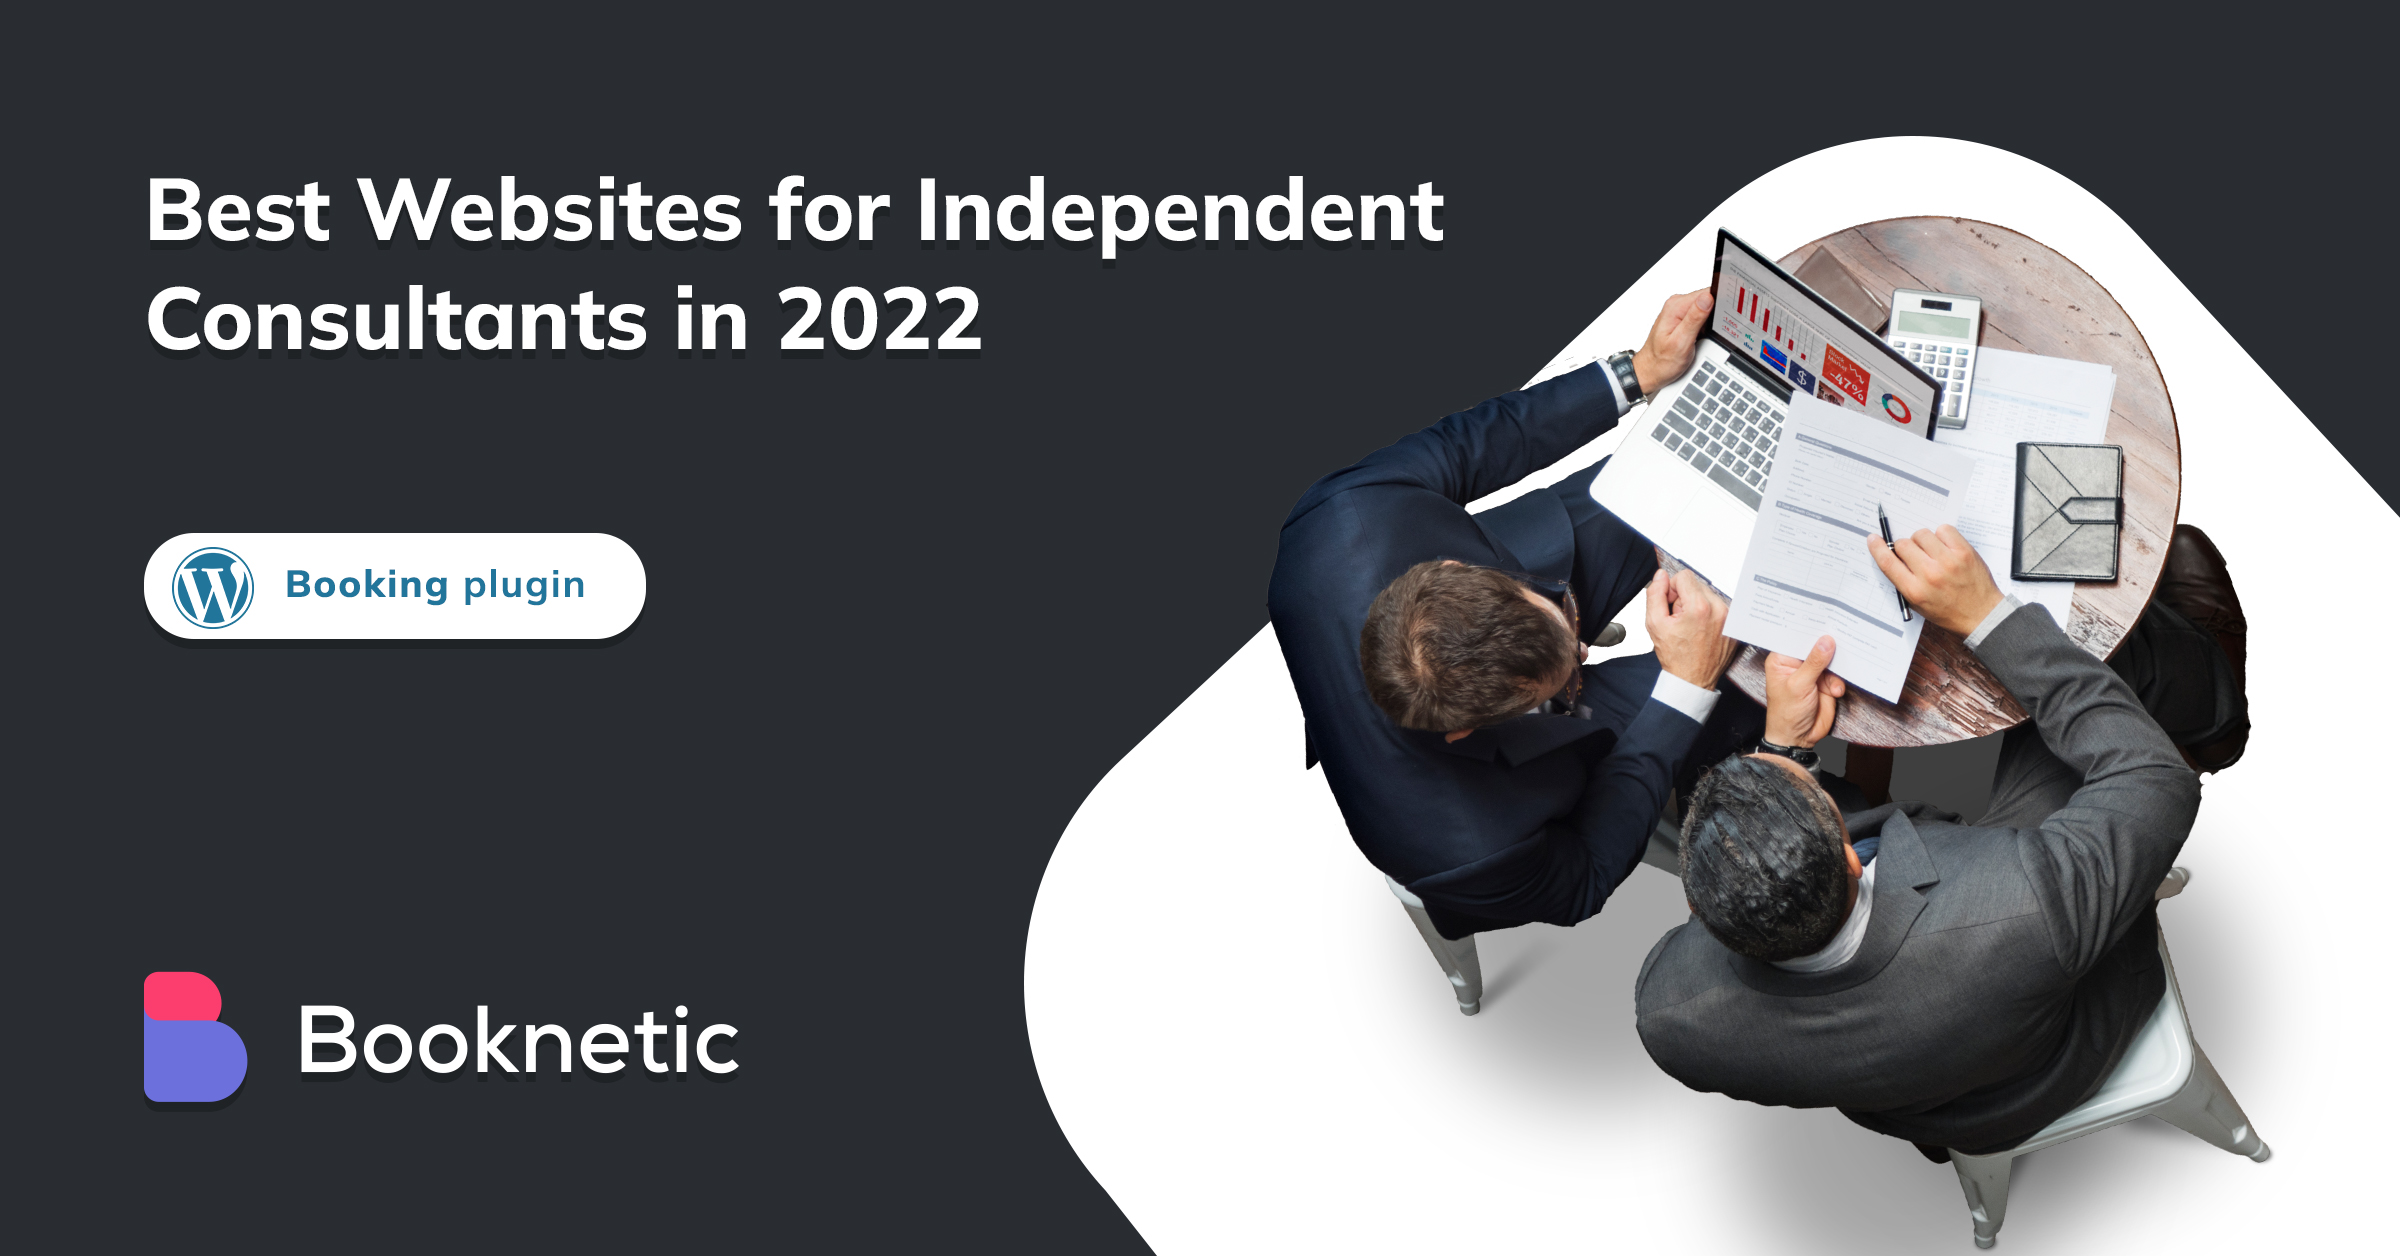 Top 11 Best Websites for Independent Consultants in 2022